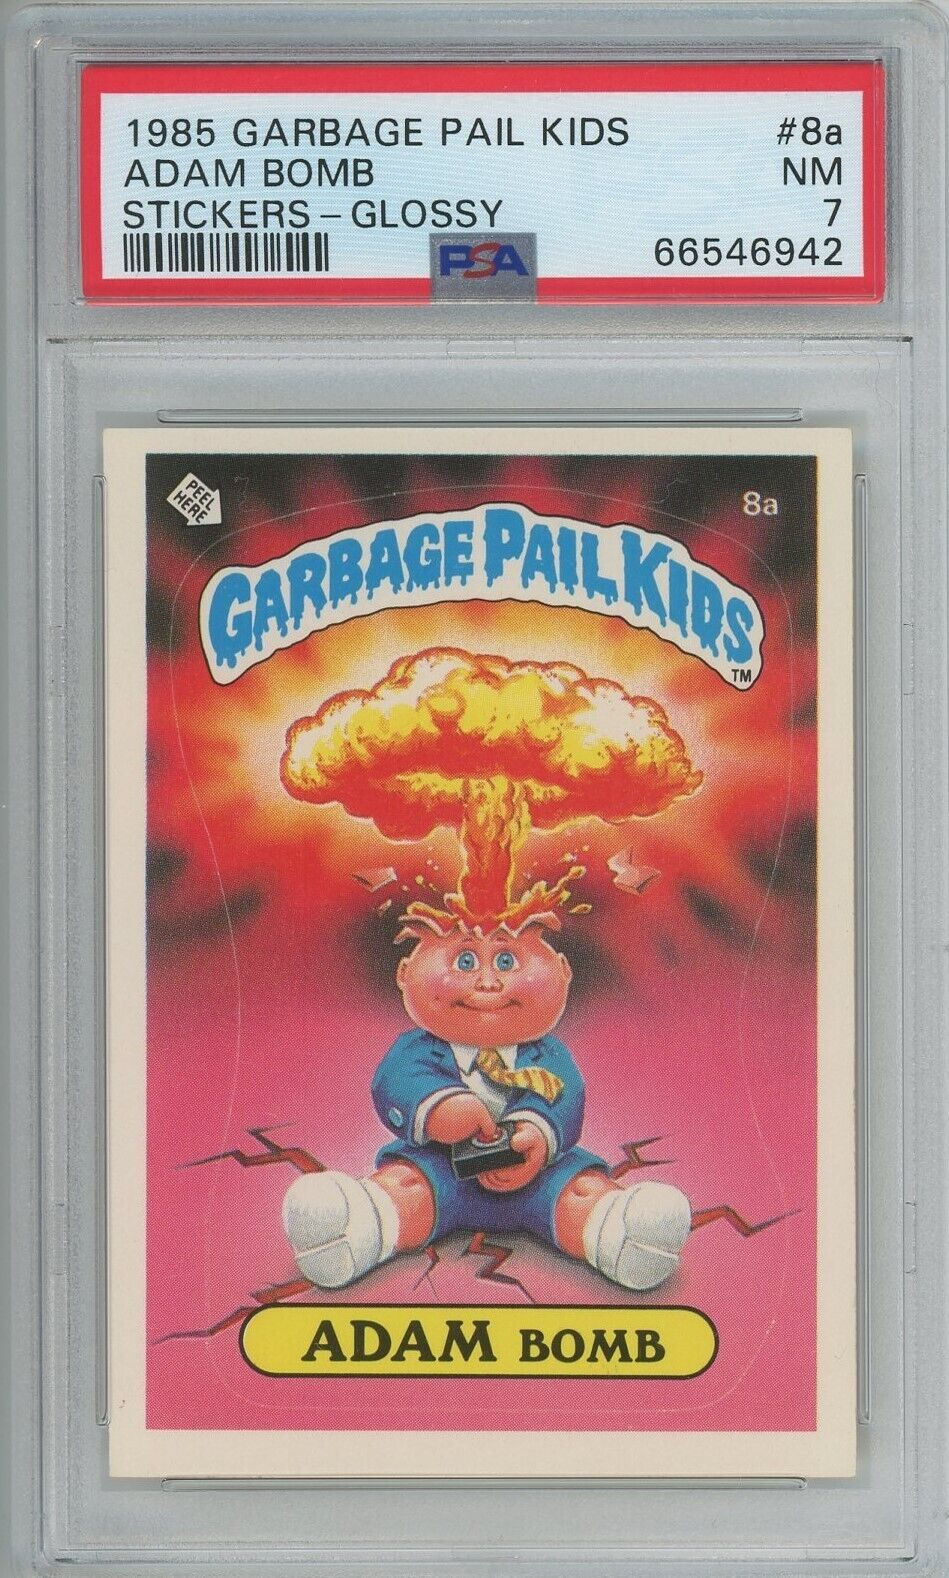 1985 Topps OS1 Garbage Pail Kids Series 1 ADAM BOMB 8a GLOSSY Card PSA 7 NM